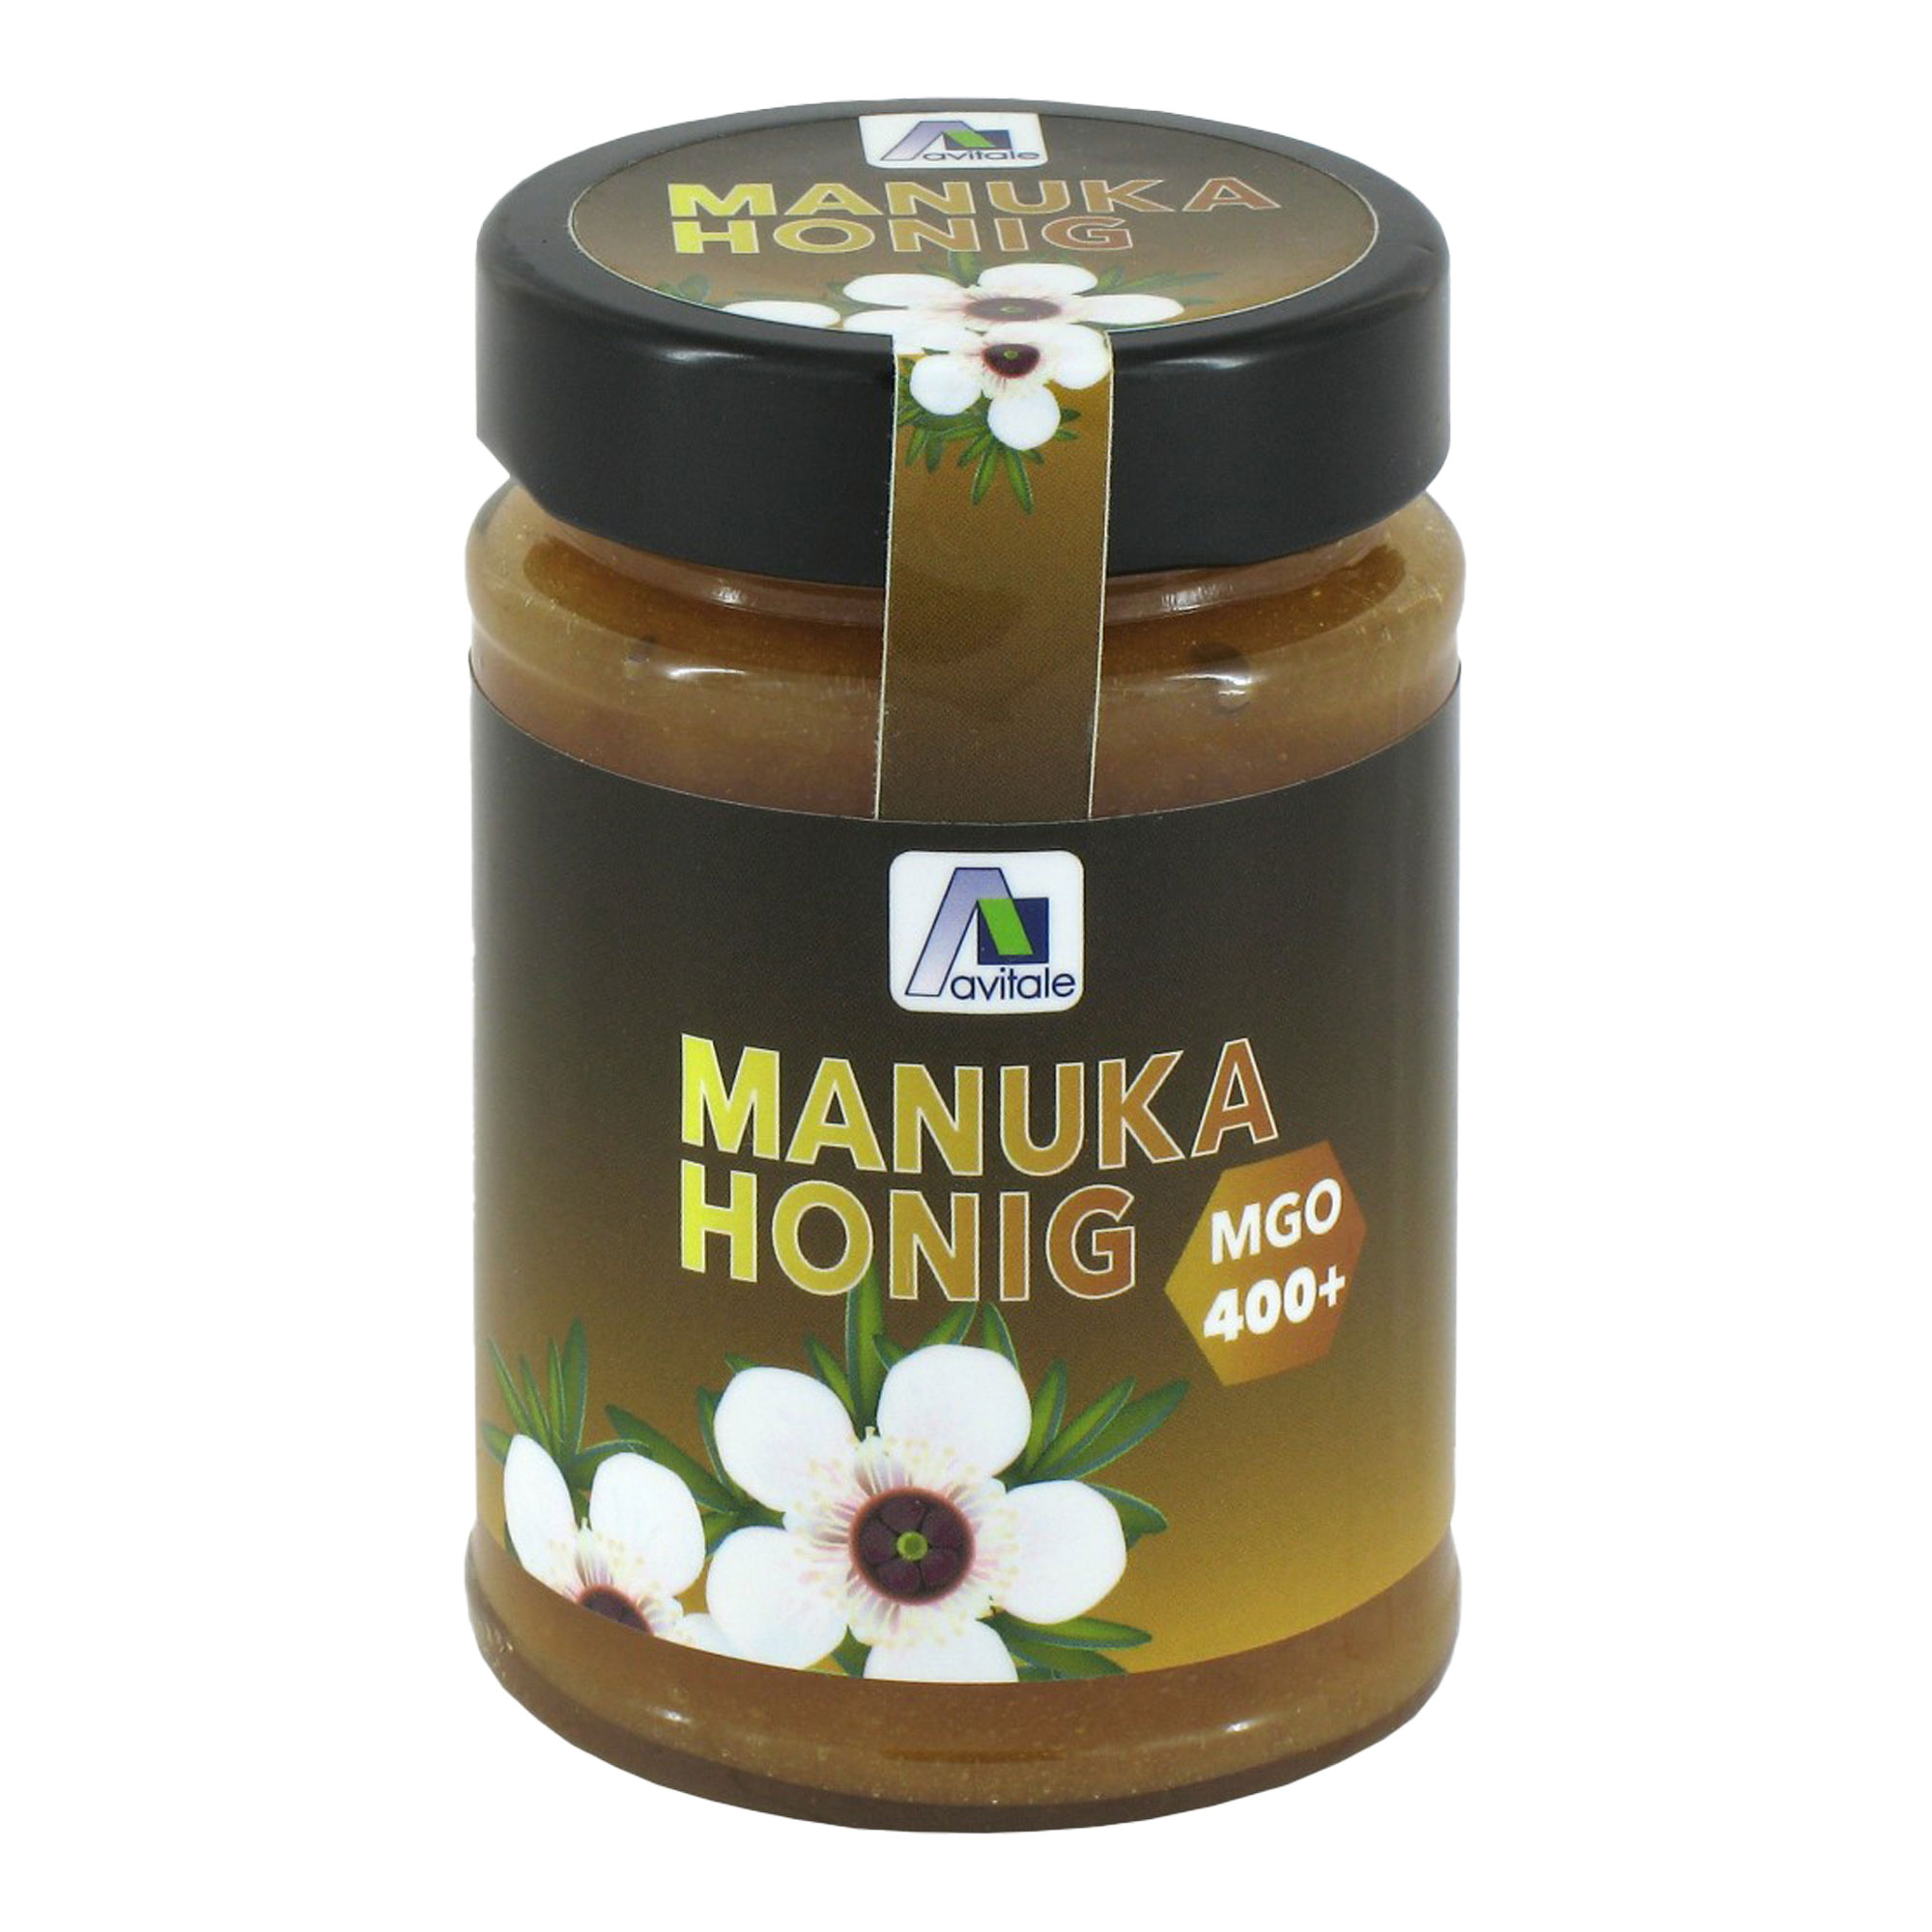 Honig aus Neuseeland mit mindestens 400 mg Methylglyoxal (MGO) pro Kilogramm Honig.